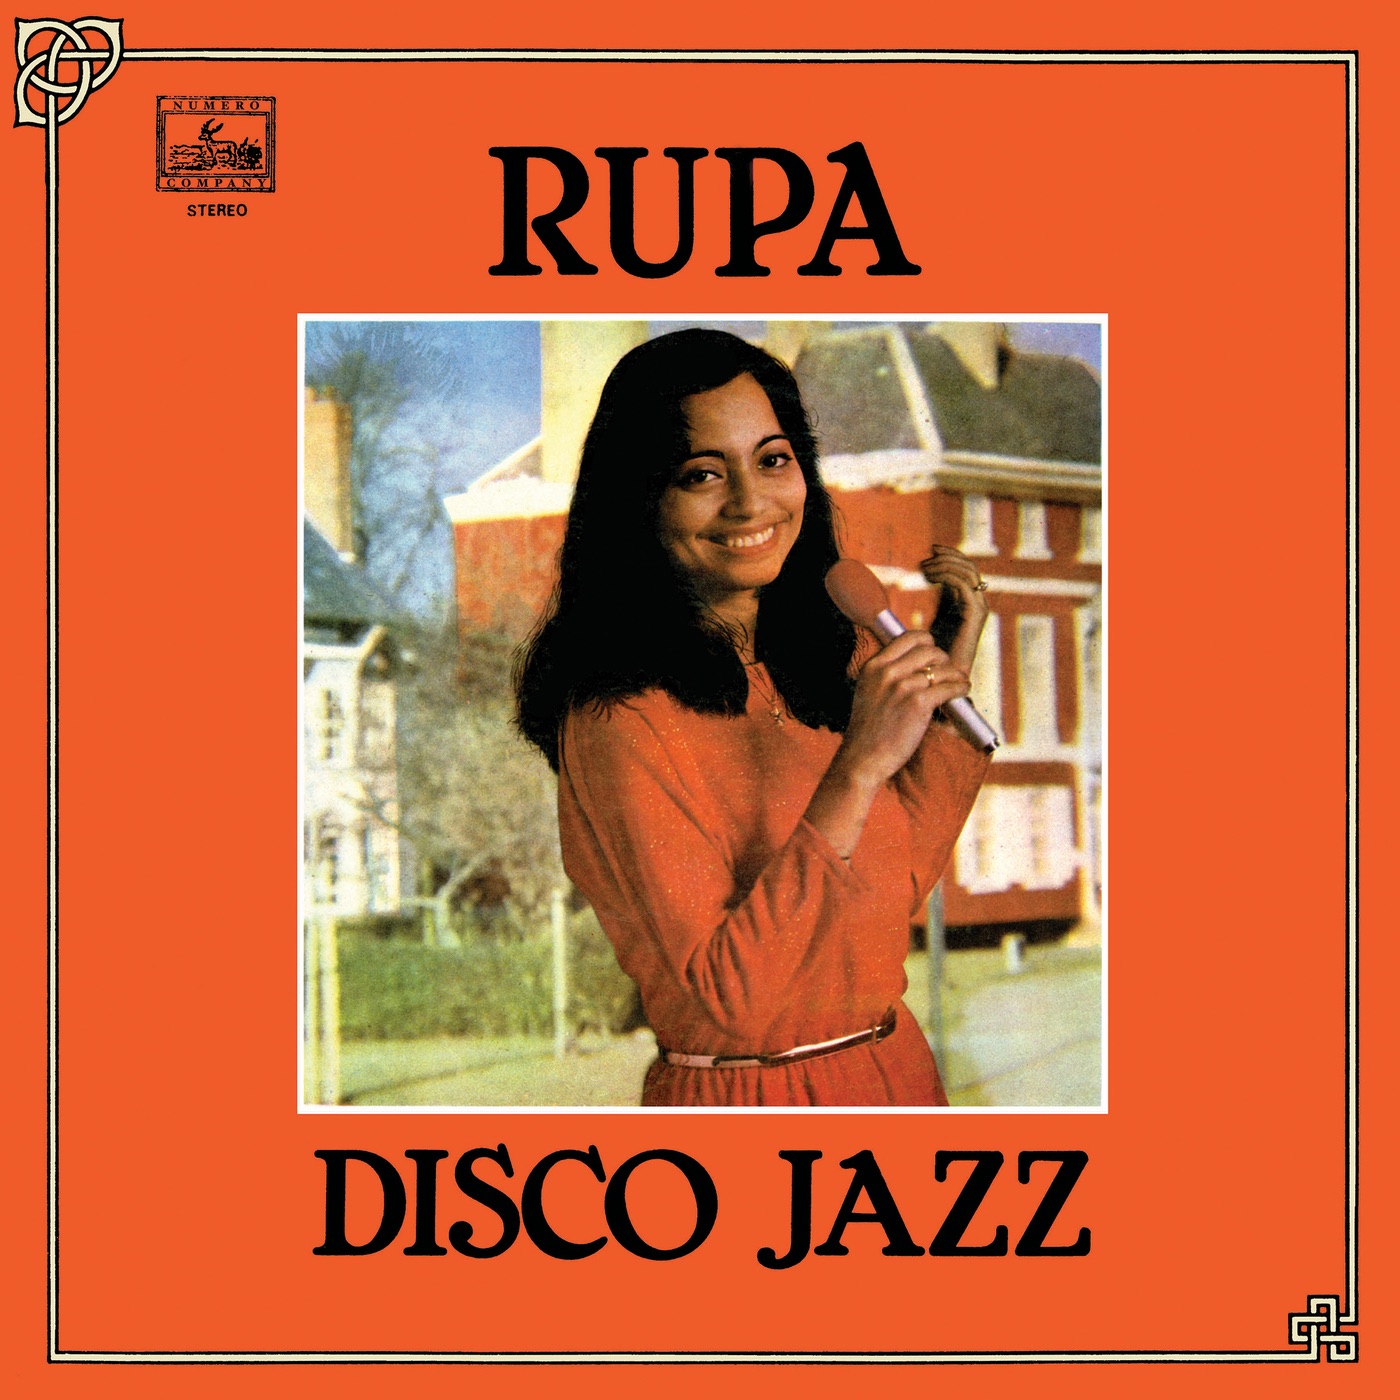 Disco Jazz by Rupa